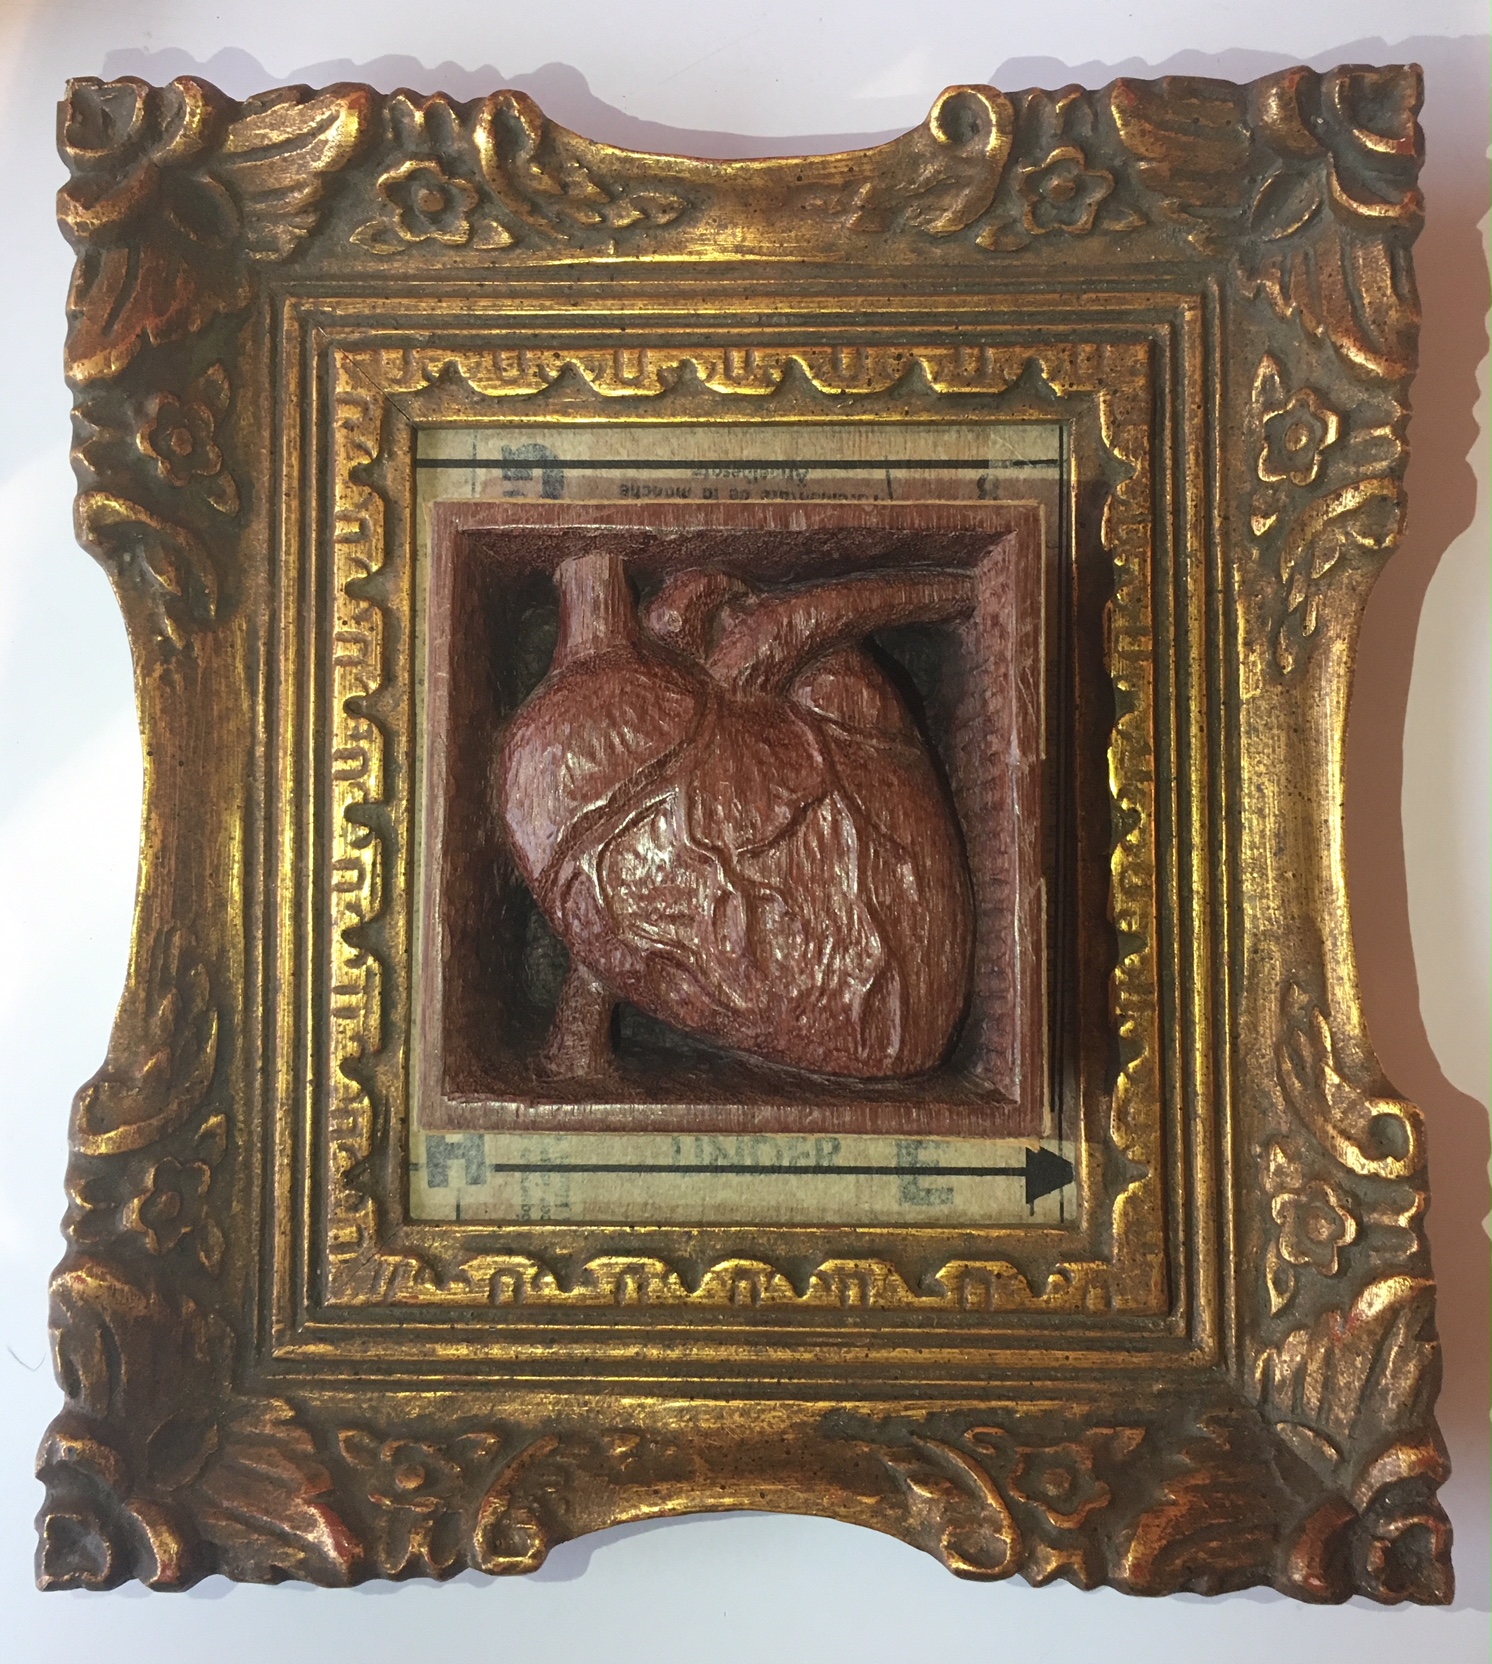 Thomas Rude, Heart in a Box, wood